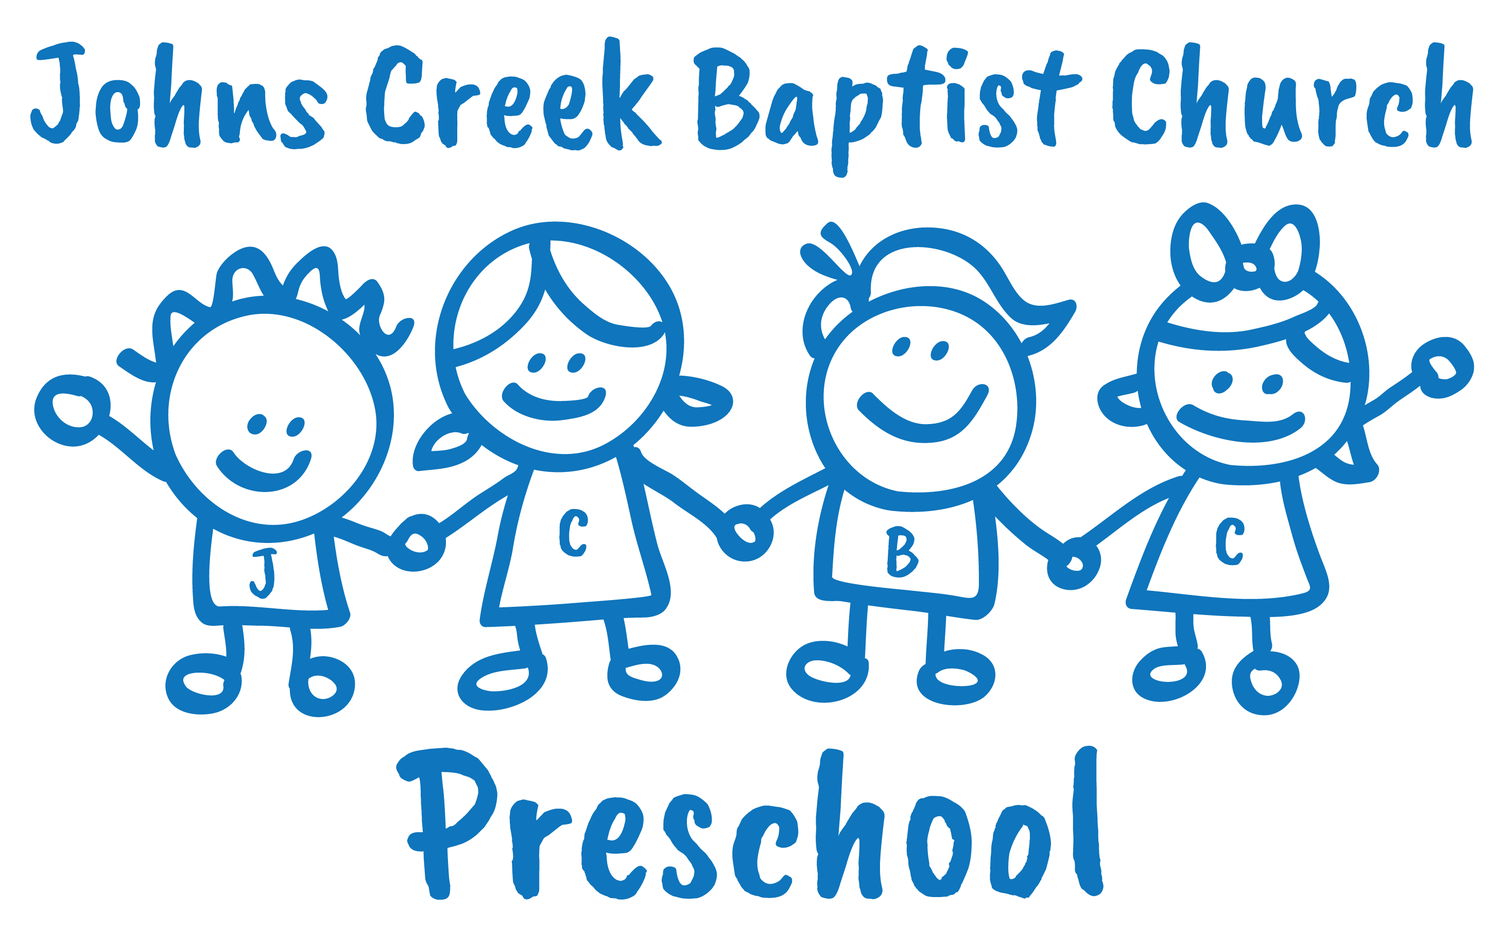 Johns Creek Baptist Church Preschool